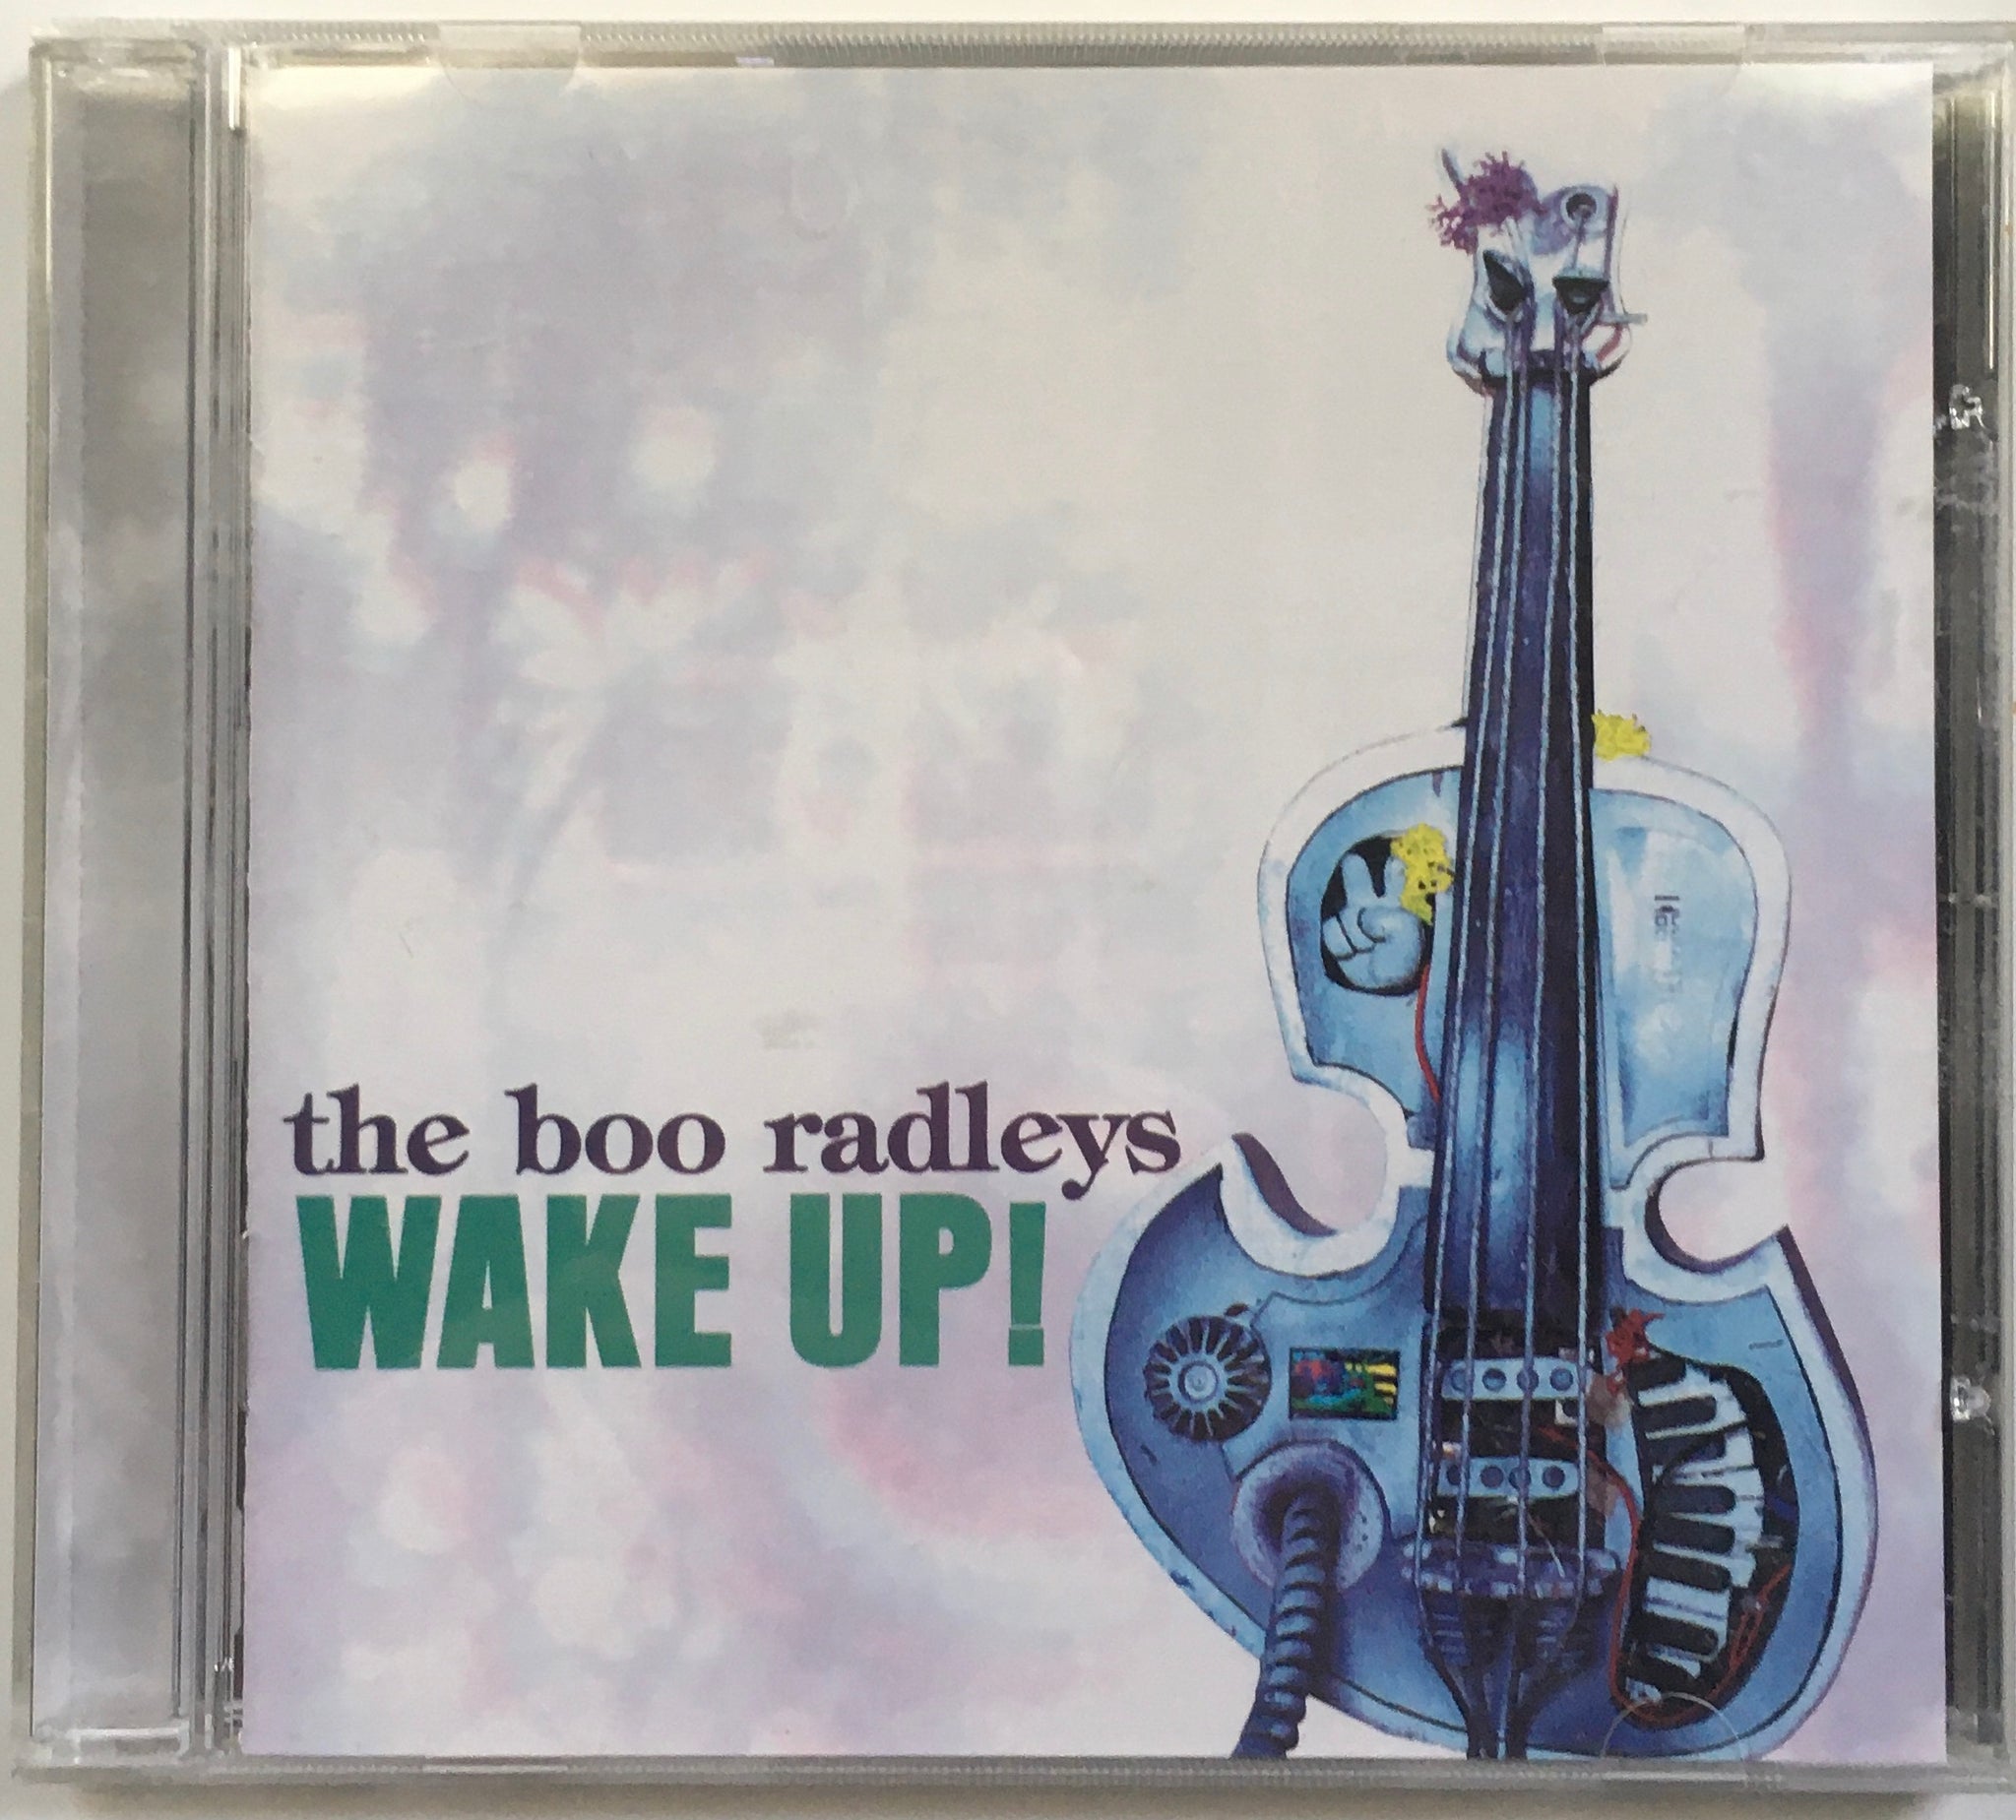 Boo Radleys "Wake Up!" Promo CD (1995)